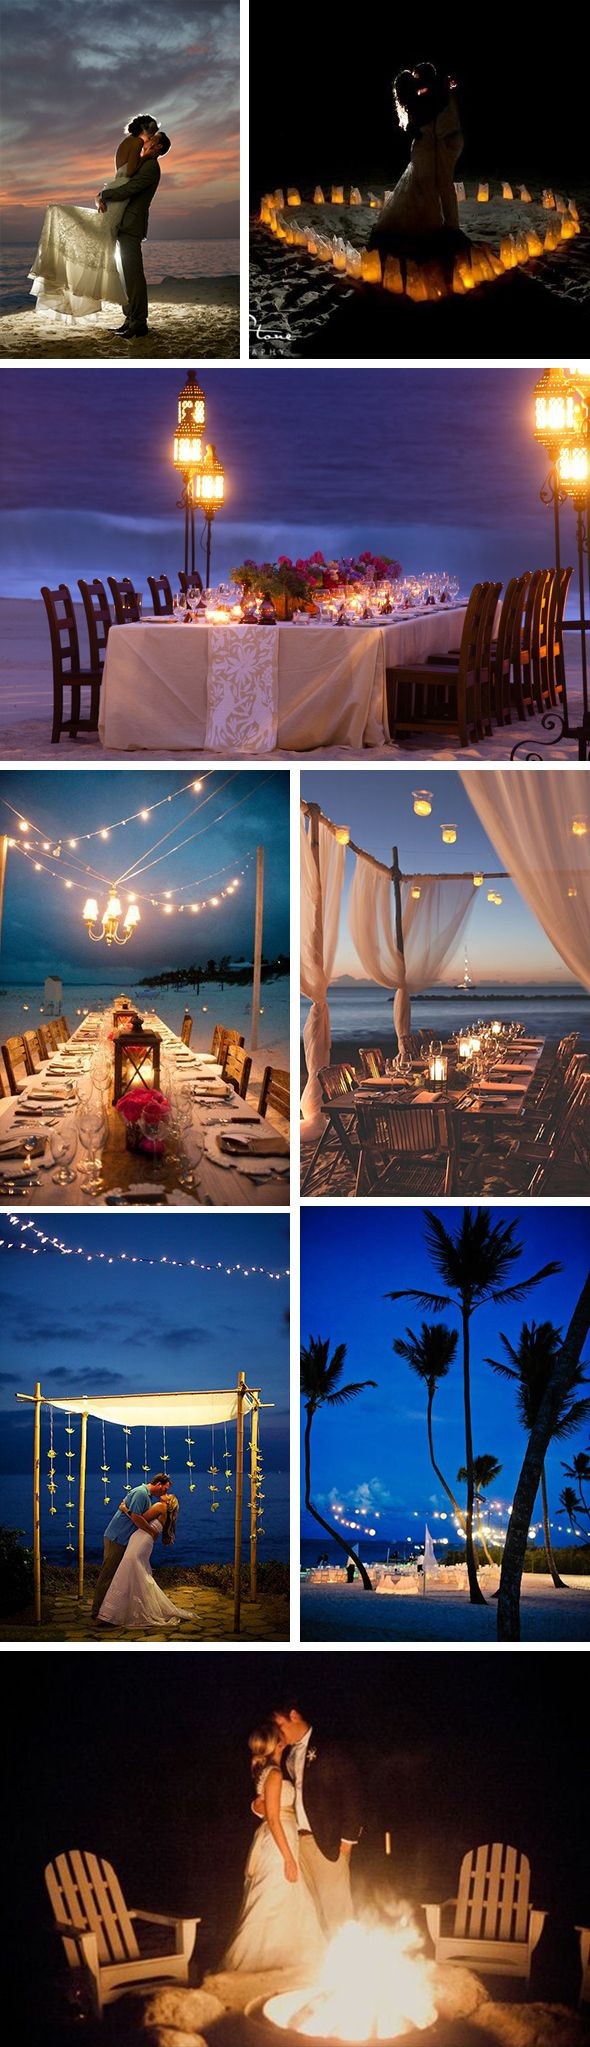 night beach weddings Beach Weddings at Night... de...